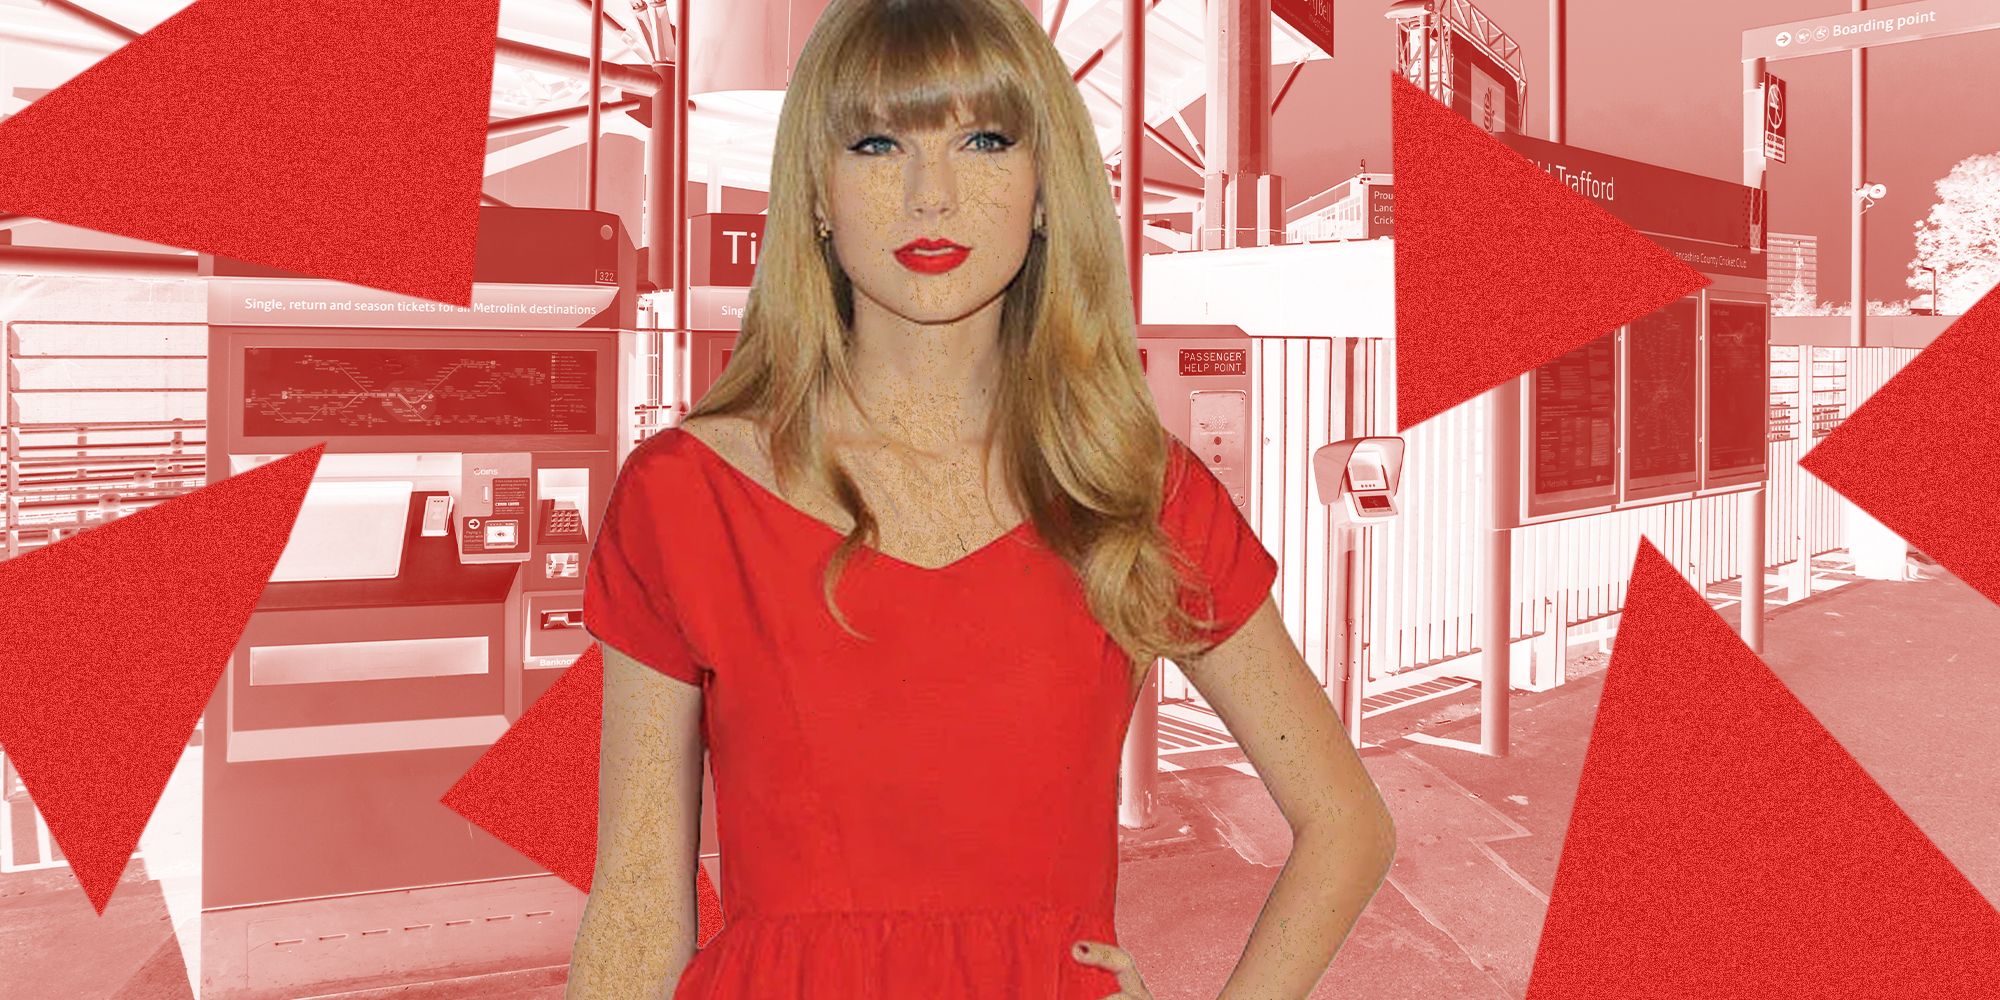 Taylor Swift cutout outside of the Metrolink depot